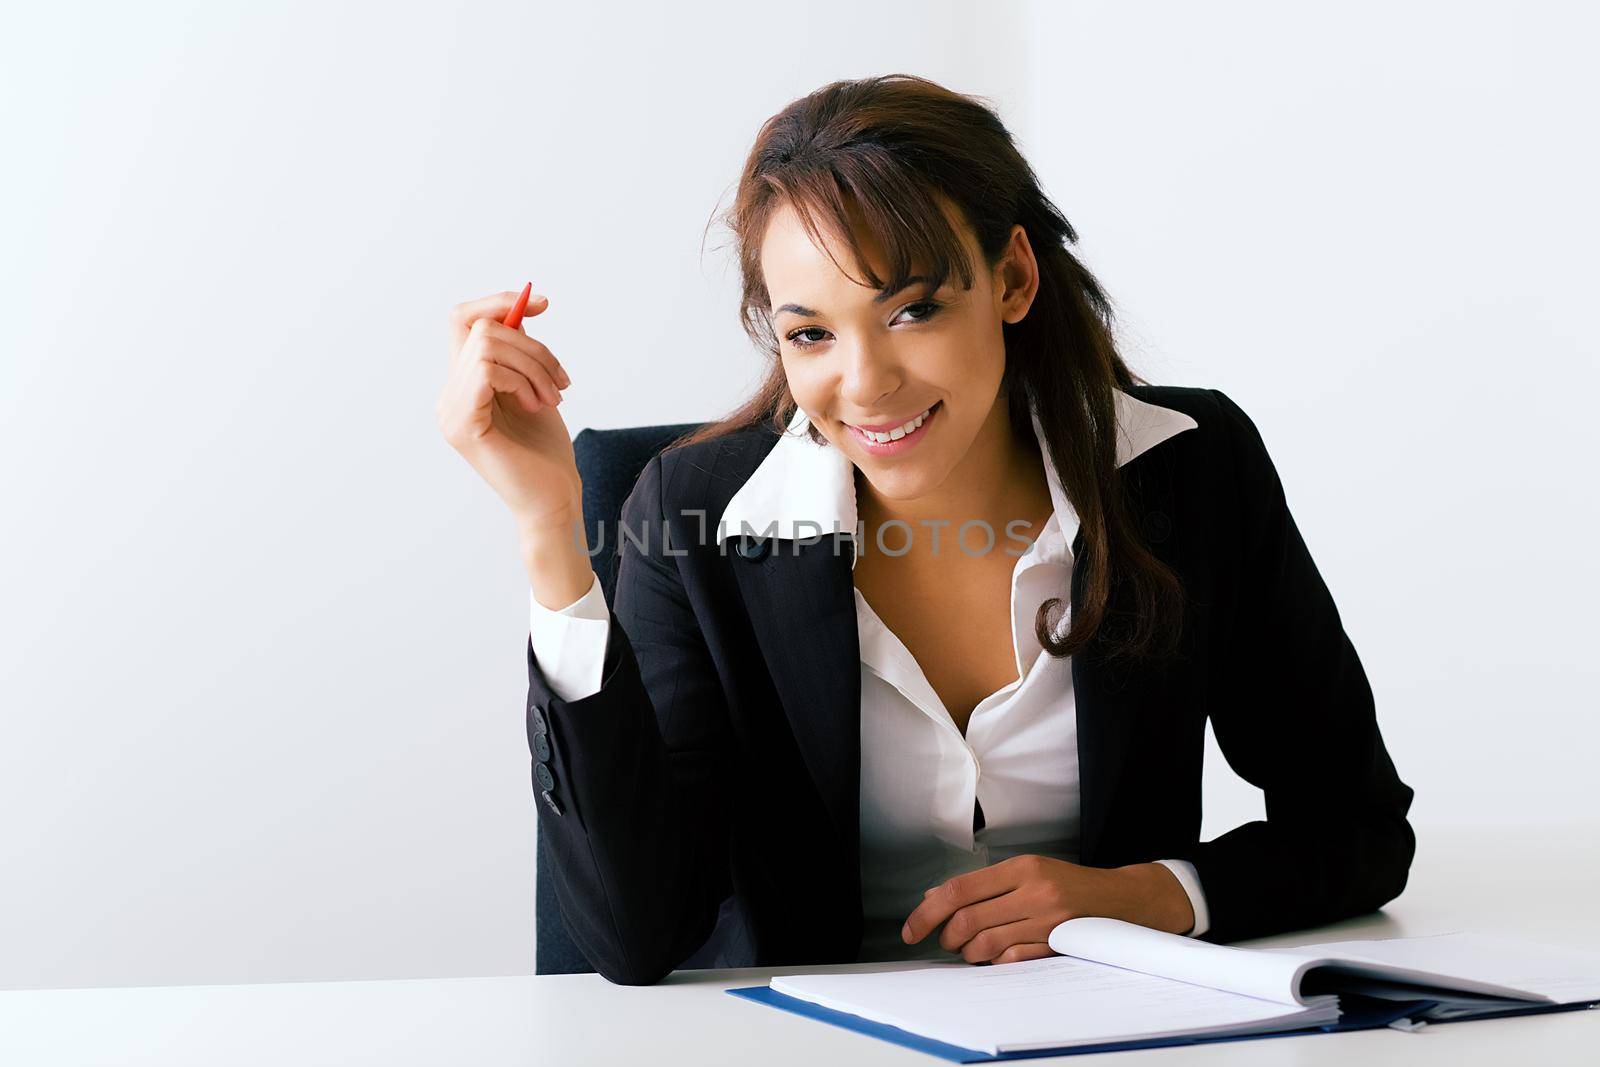 Female professional at her desk, smiling